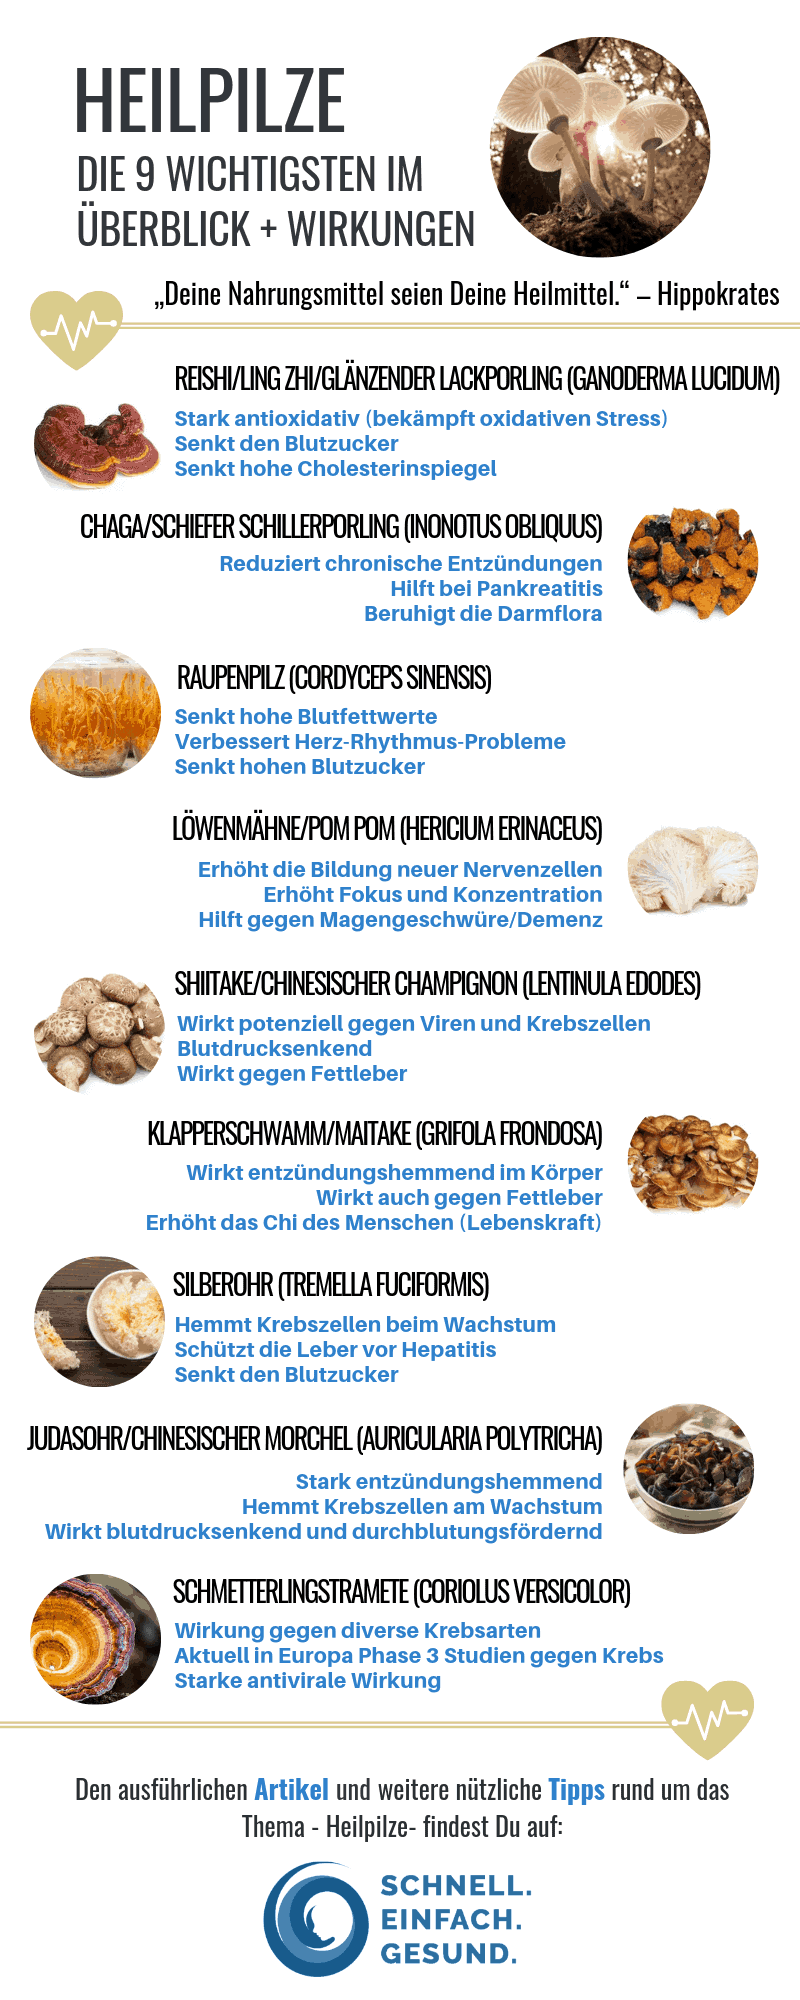 Heilpilze Infografik die wichtigsten Pilze im Überblick